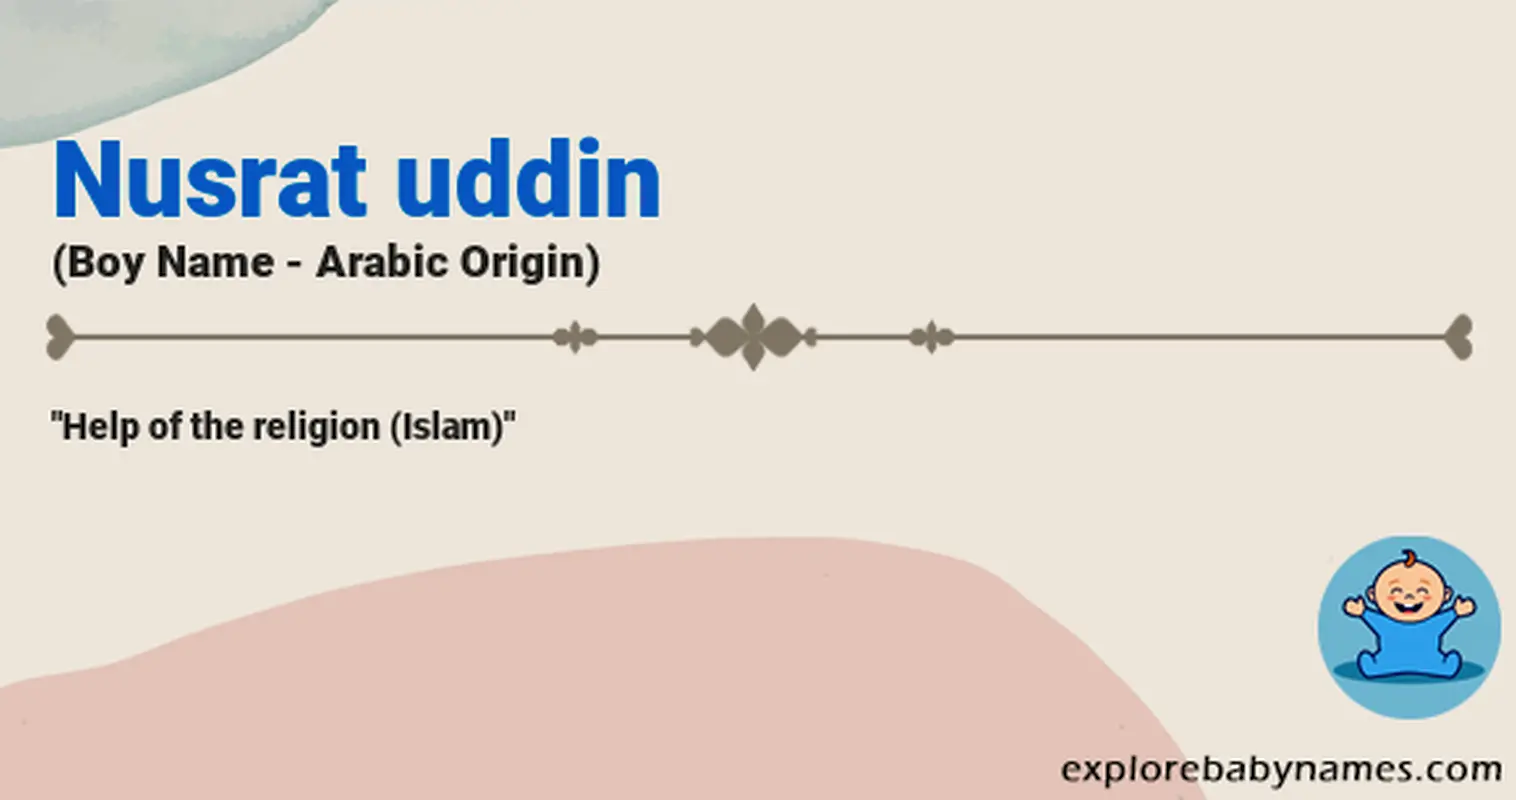 Meaning of Nusrat uddin